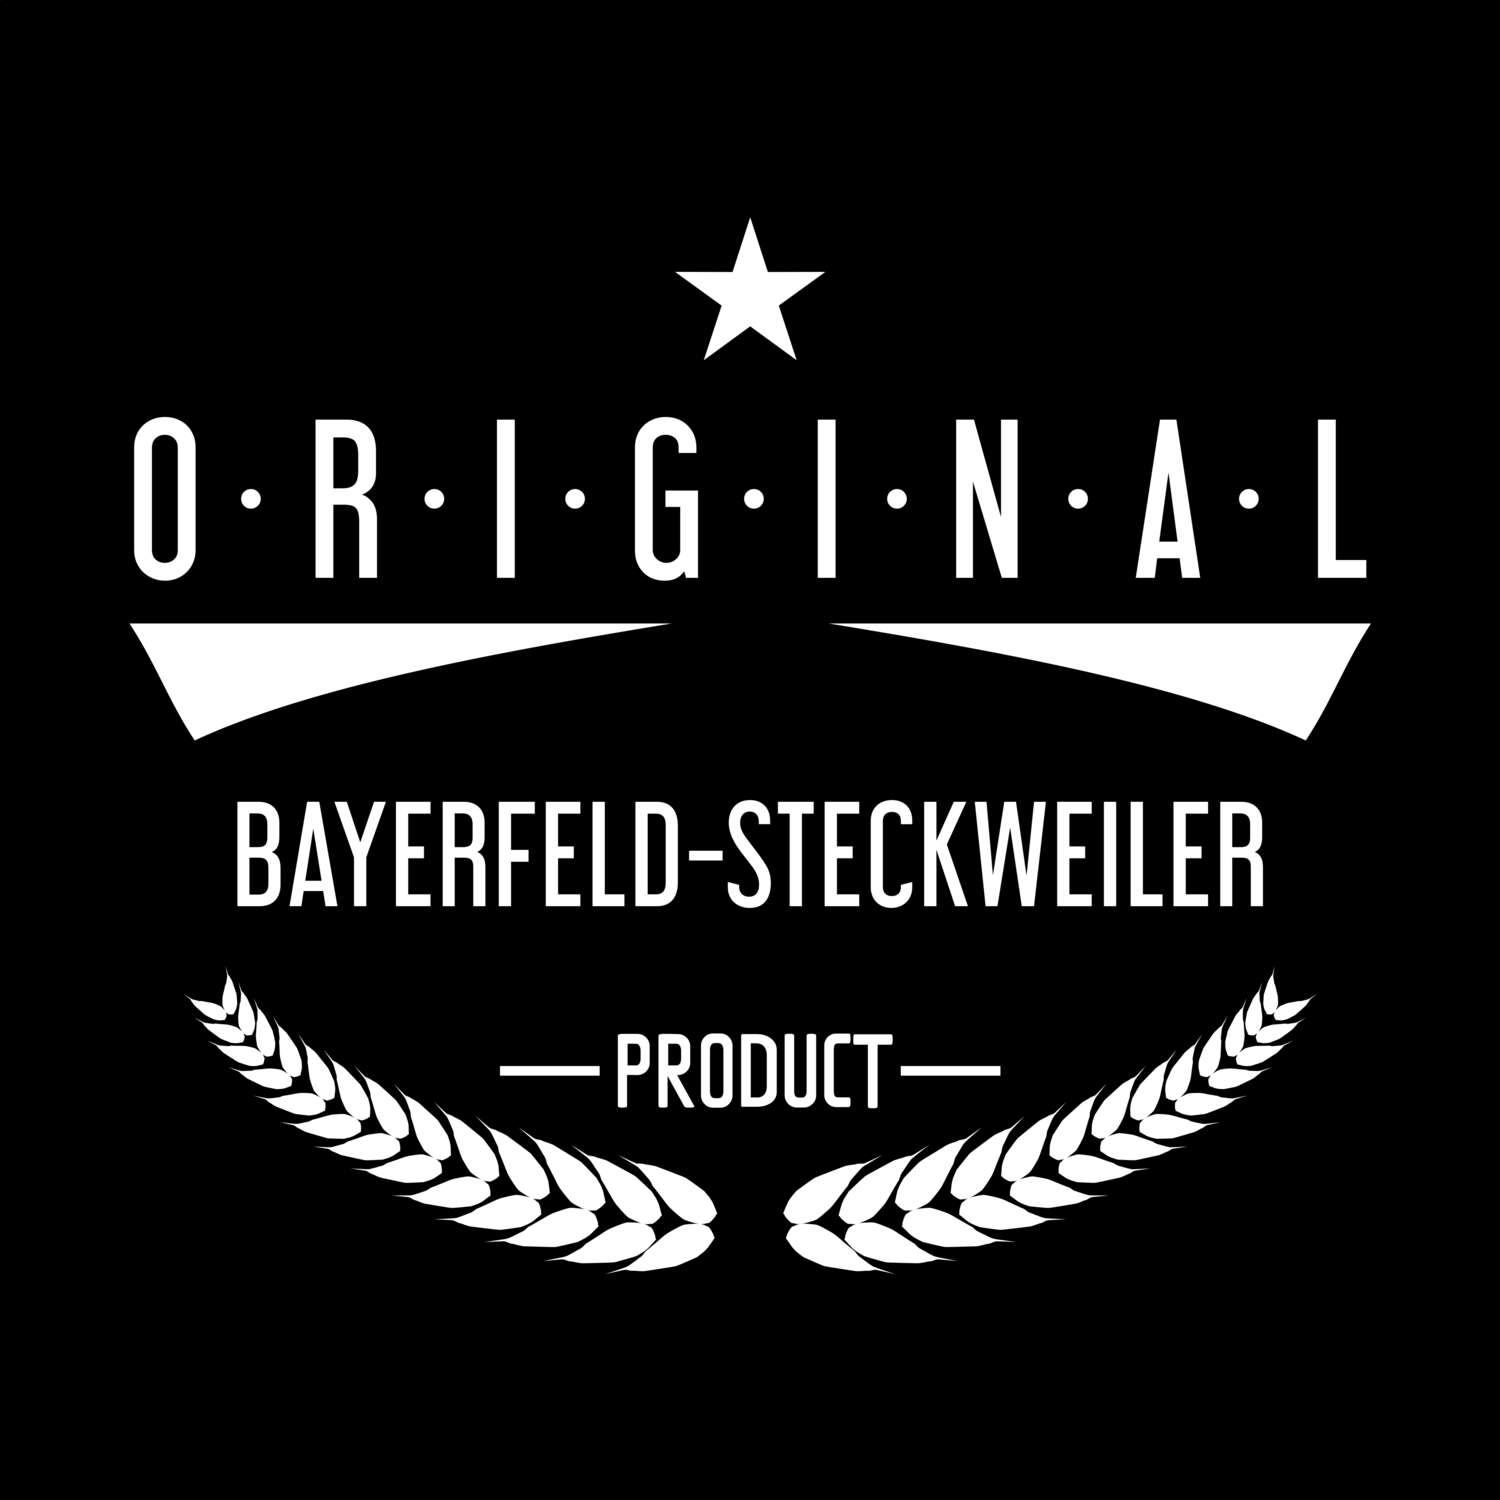 Bayerfeld-Steckweiler T-Shirt »Original Product«